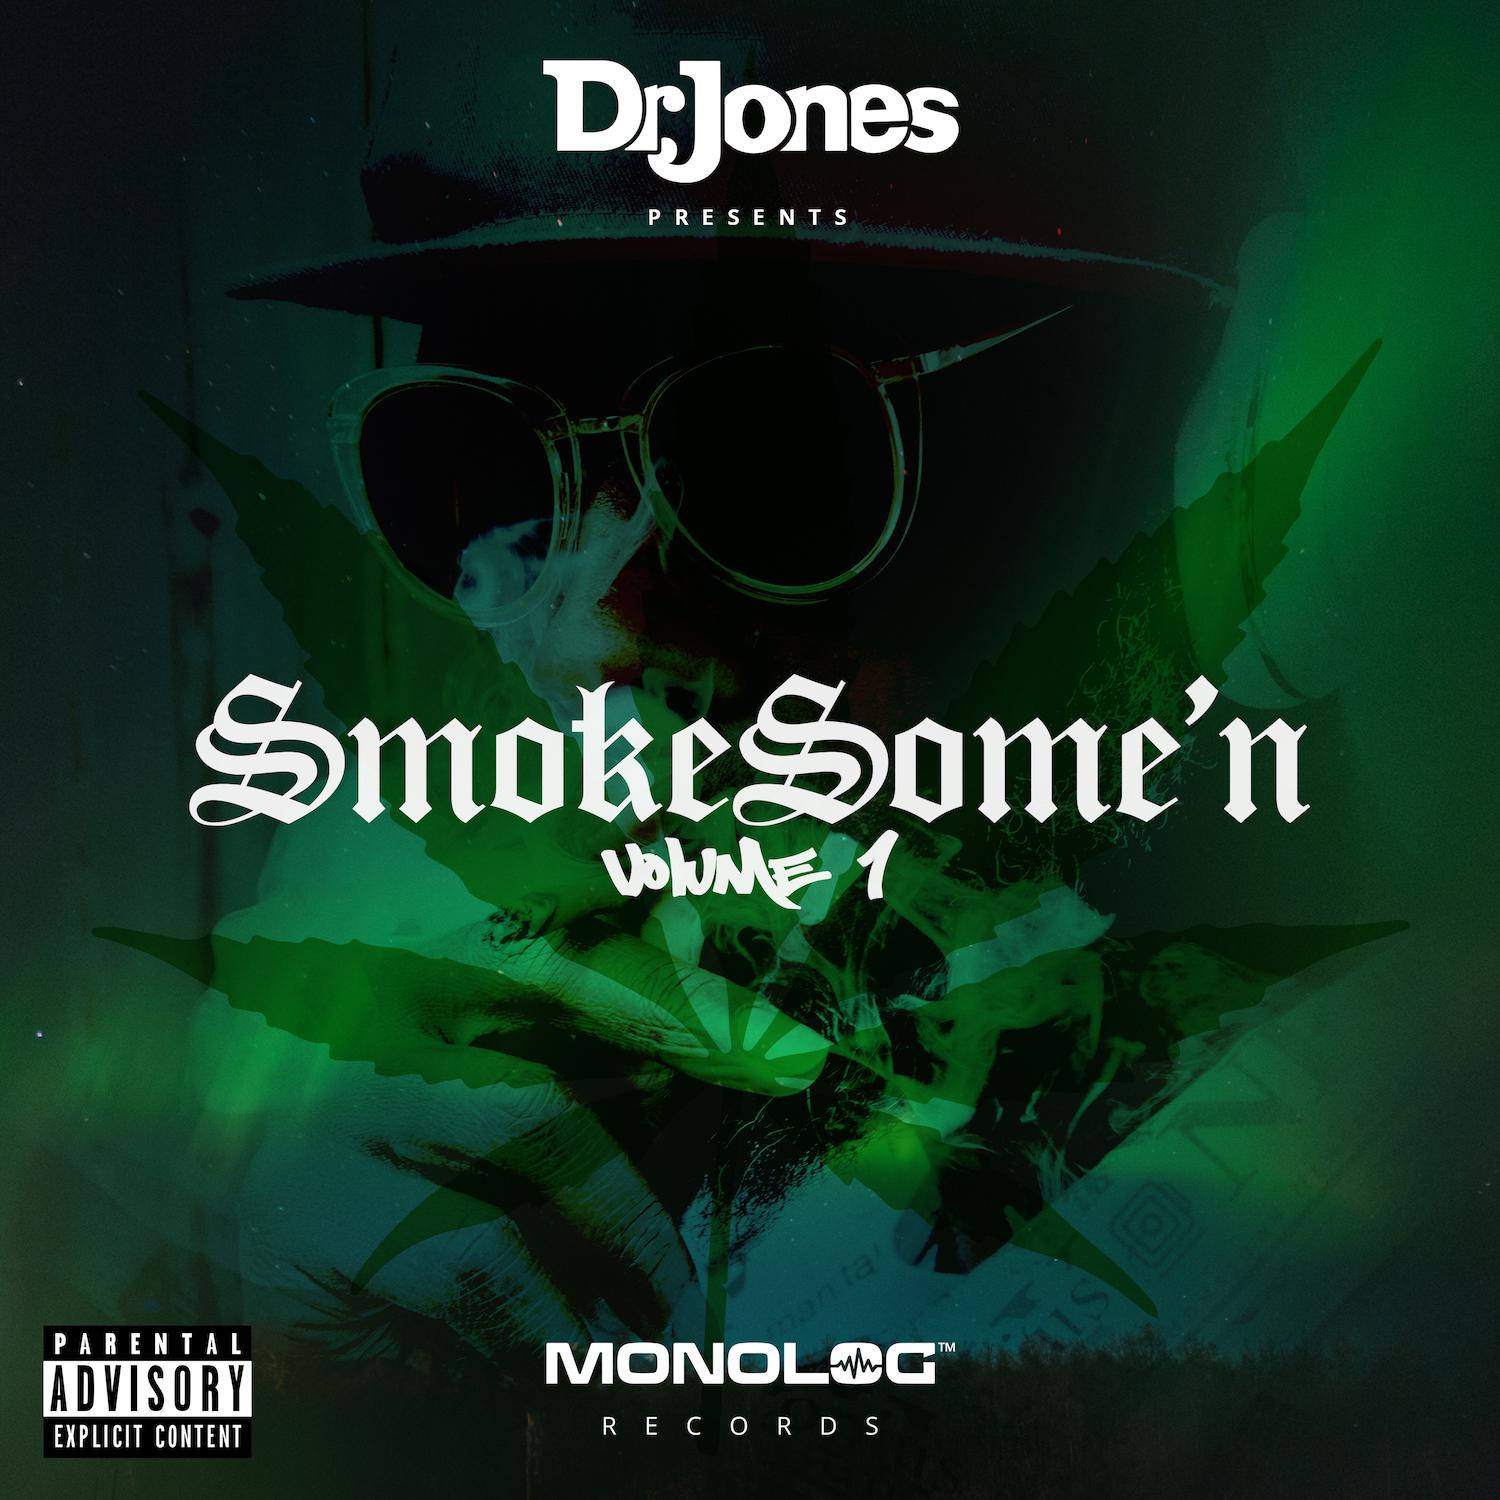 Dr. Jones Presents: Smoke Some'n, Vol. 1